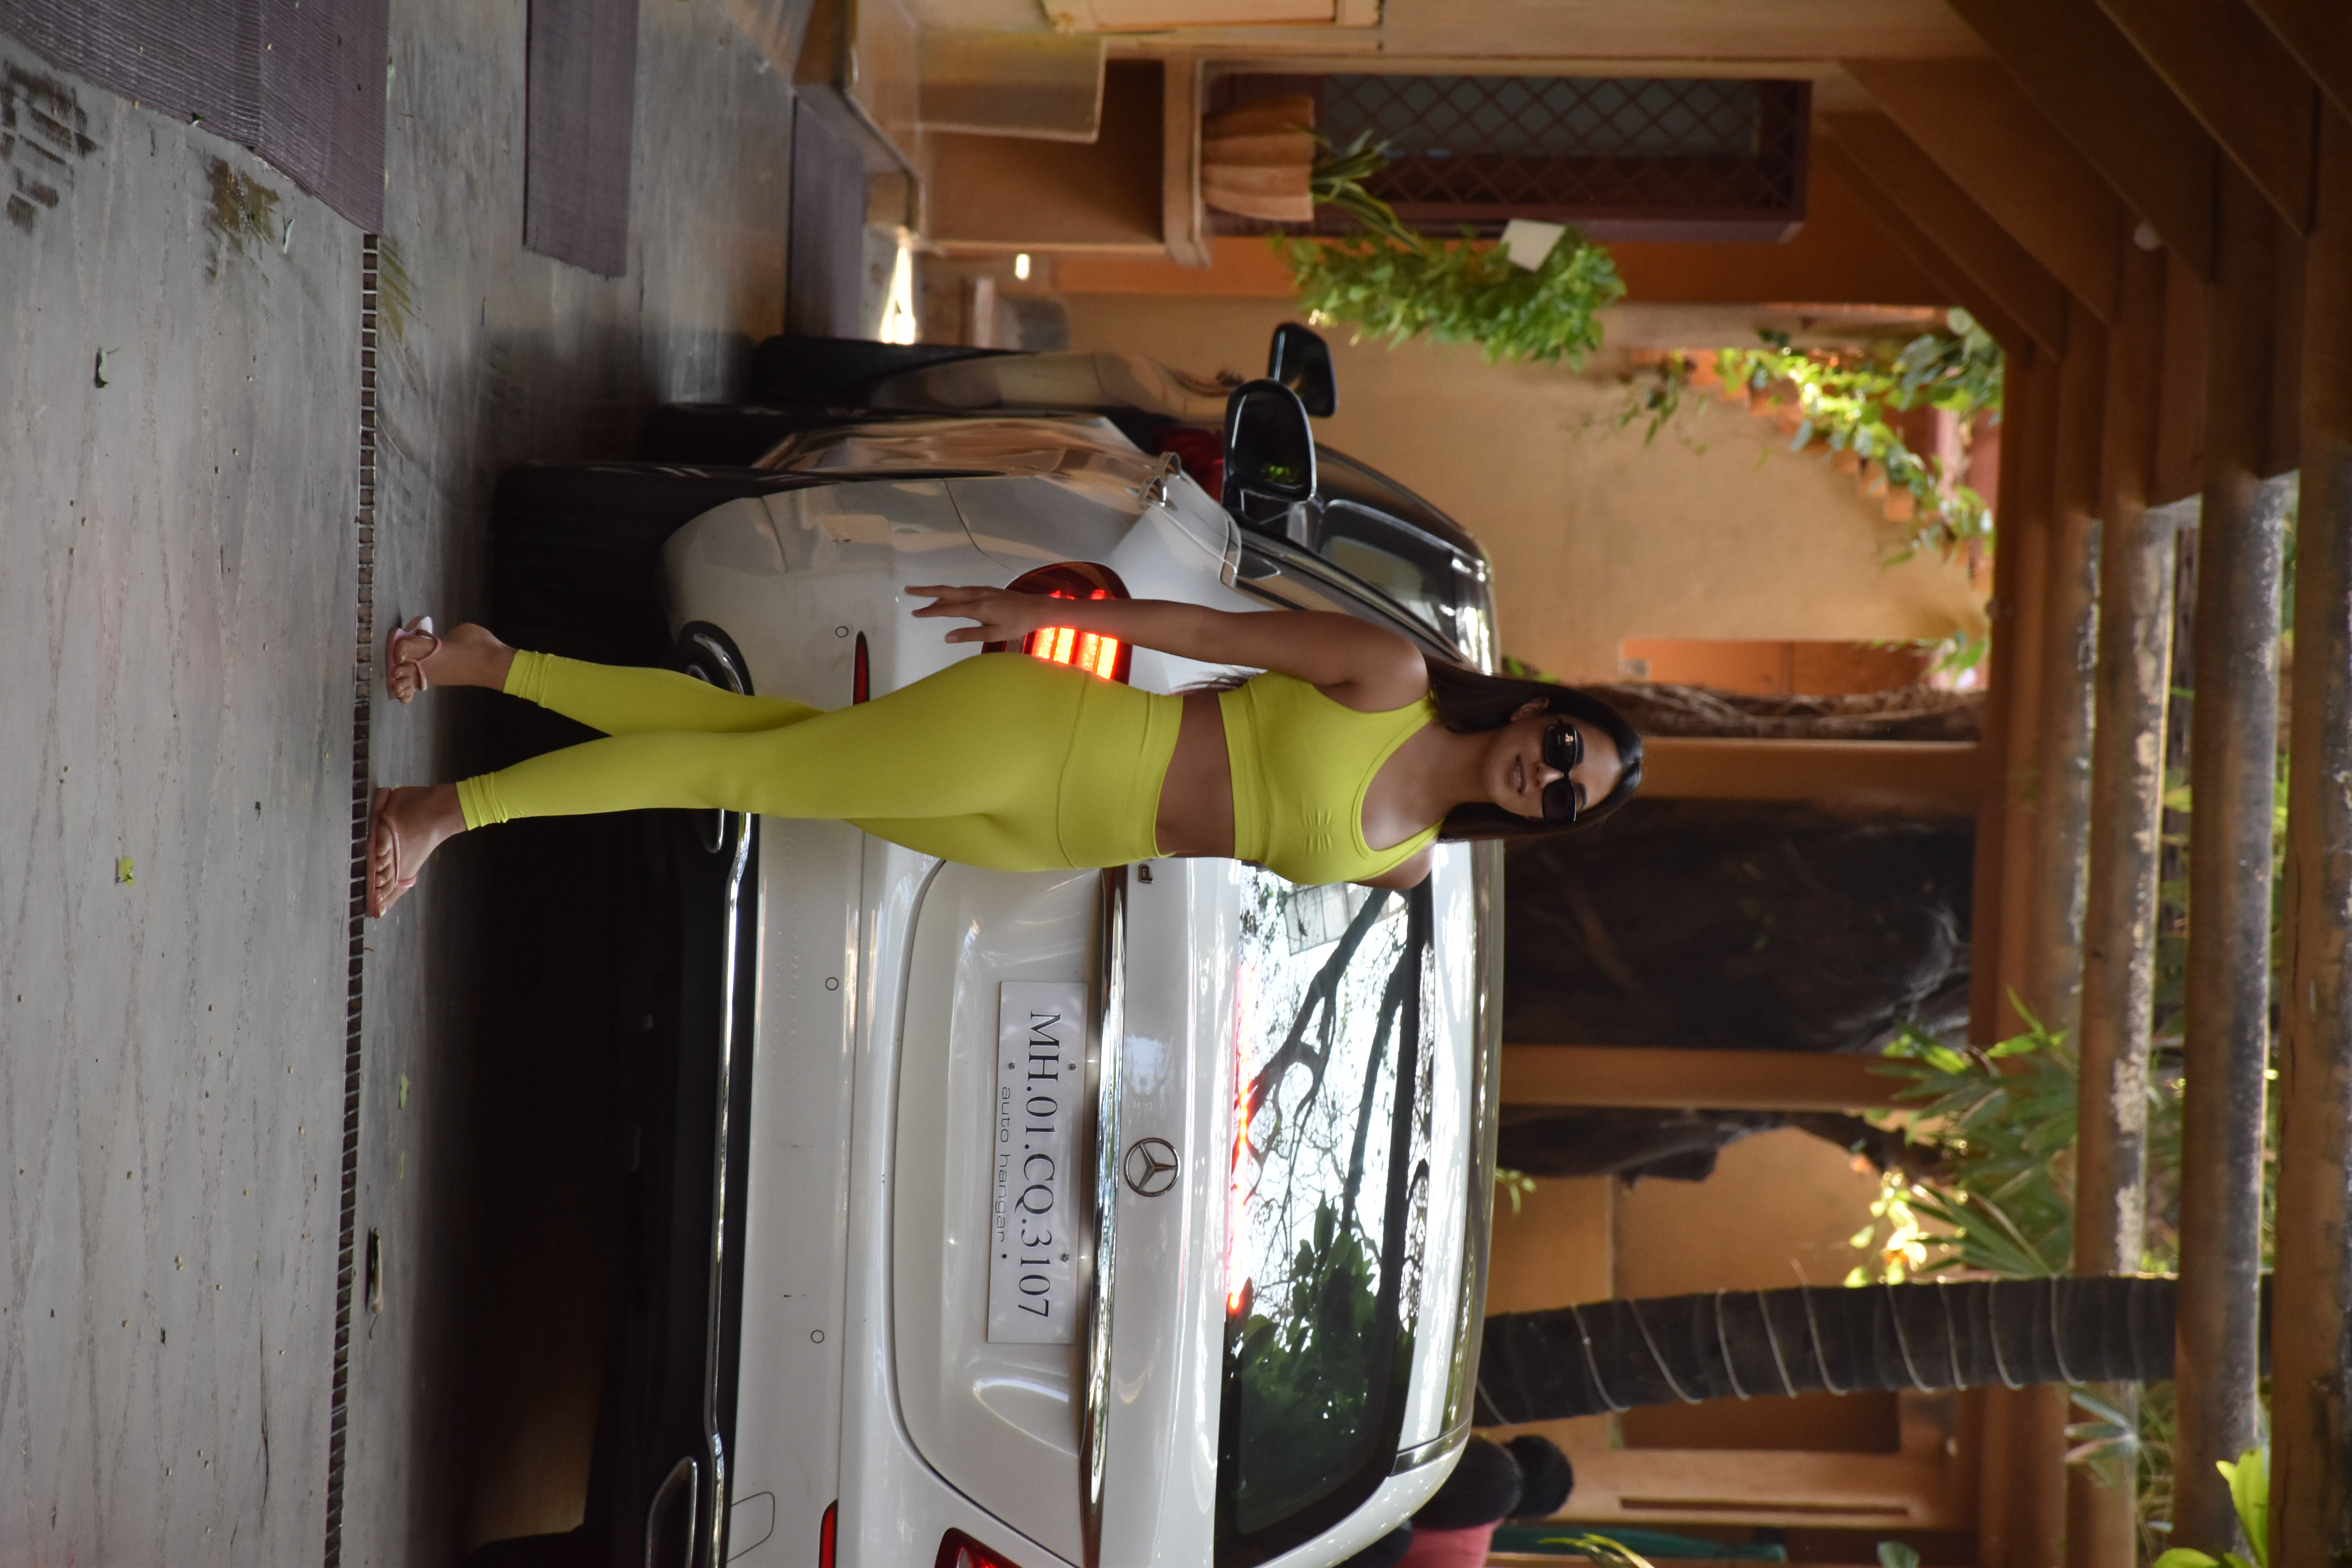 Kiara Advani was wearing yellow yoga pants with a matching top.